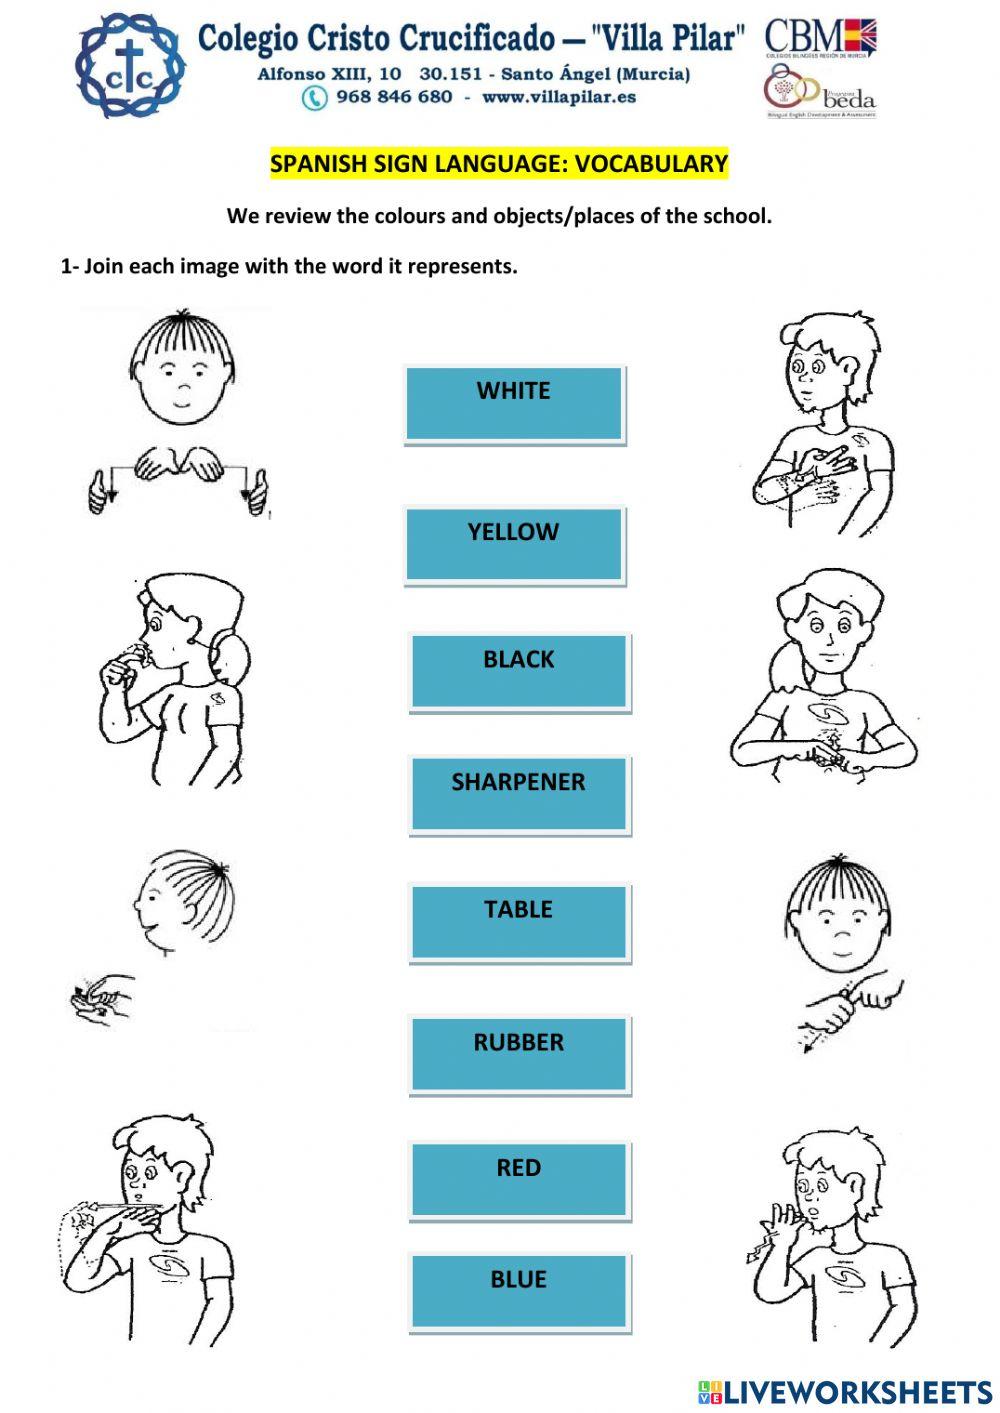 Spanish sign language: vocabulary